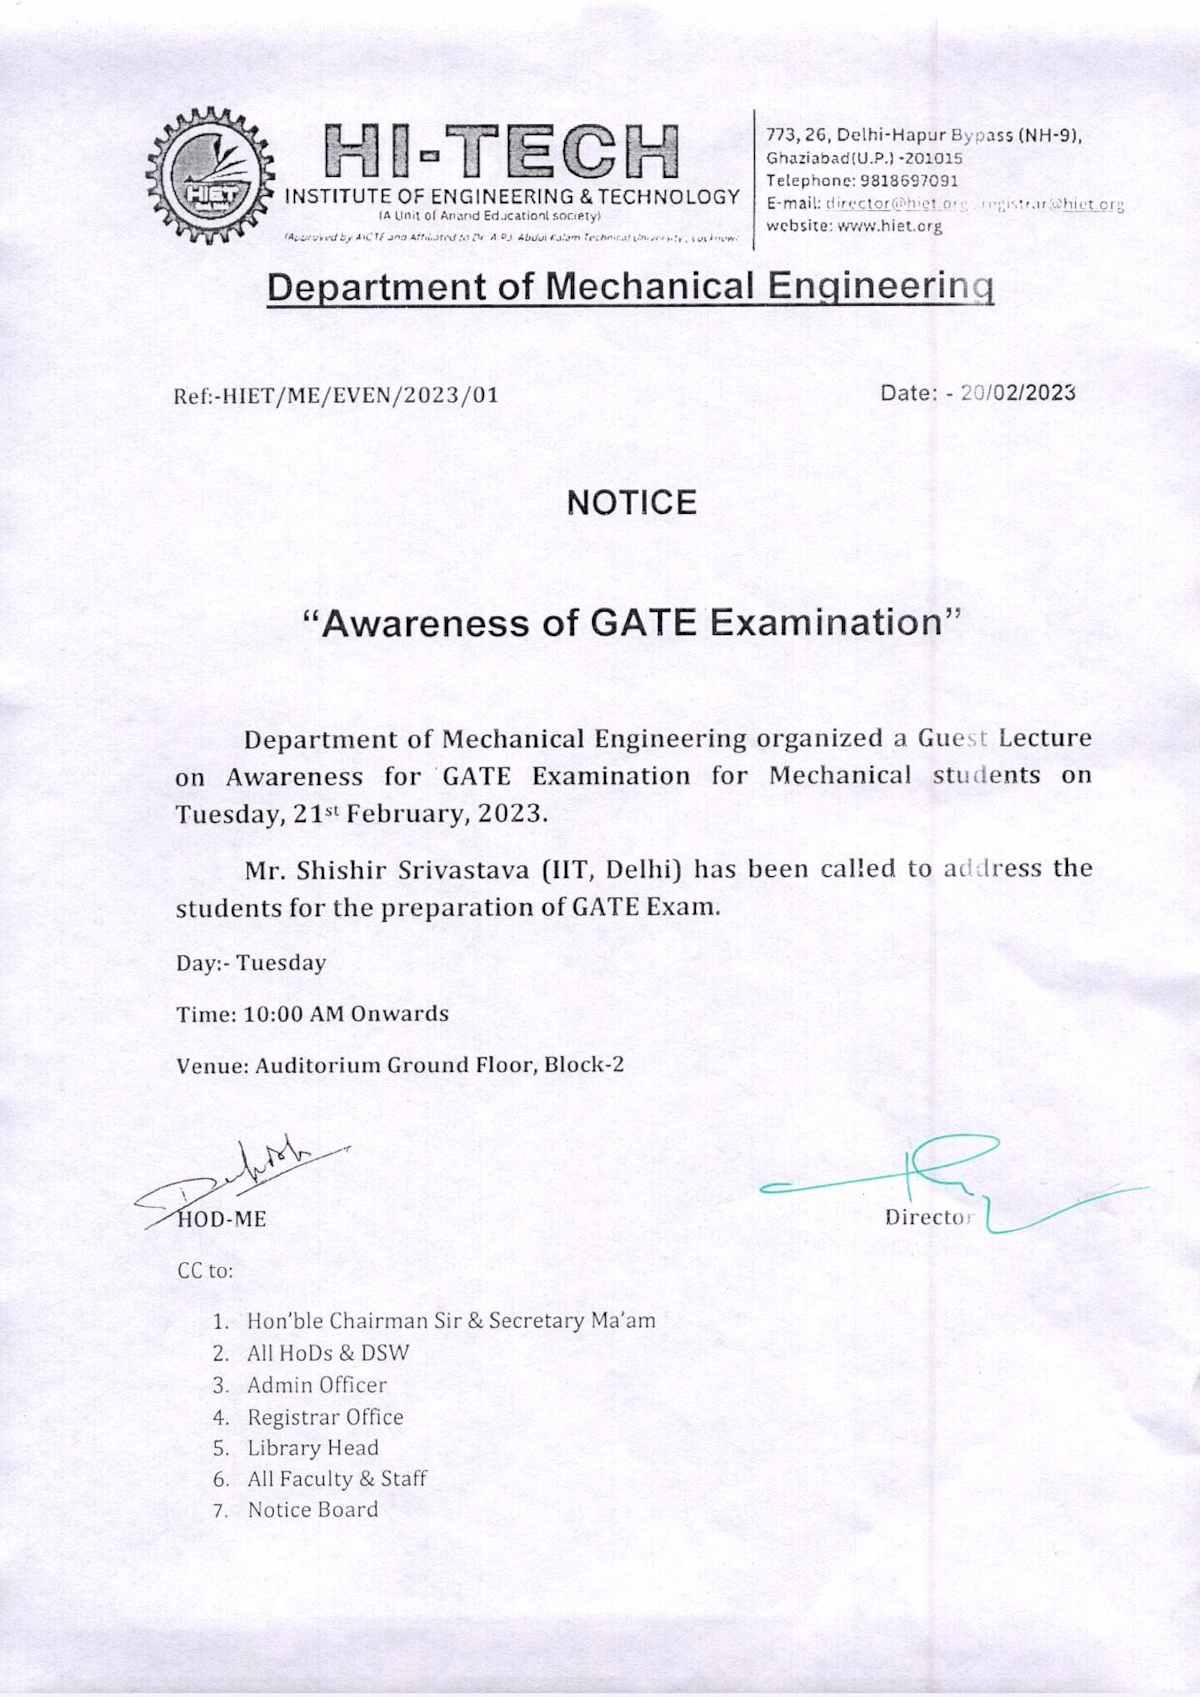 Awareness of GATE Examination